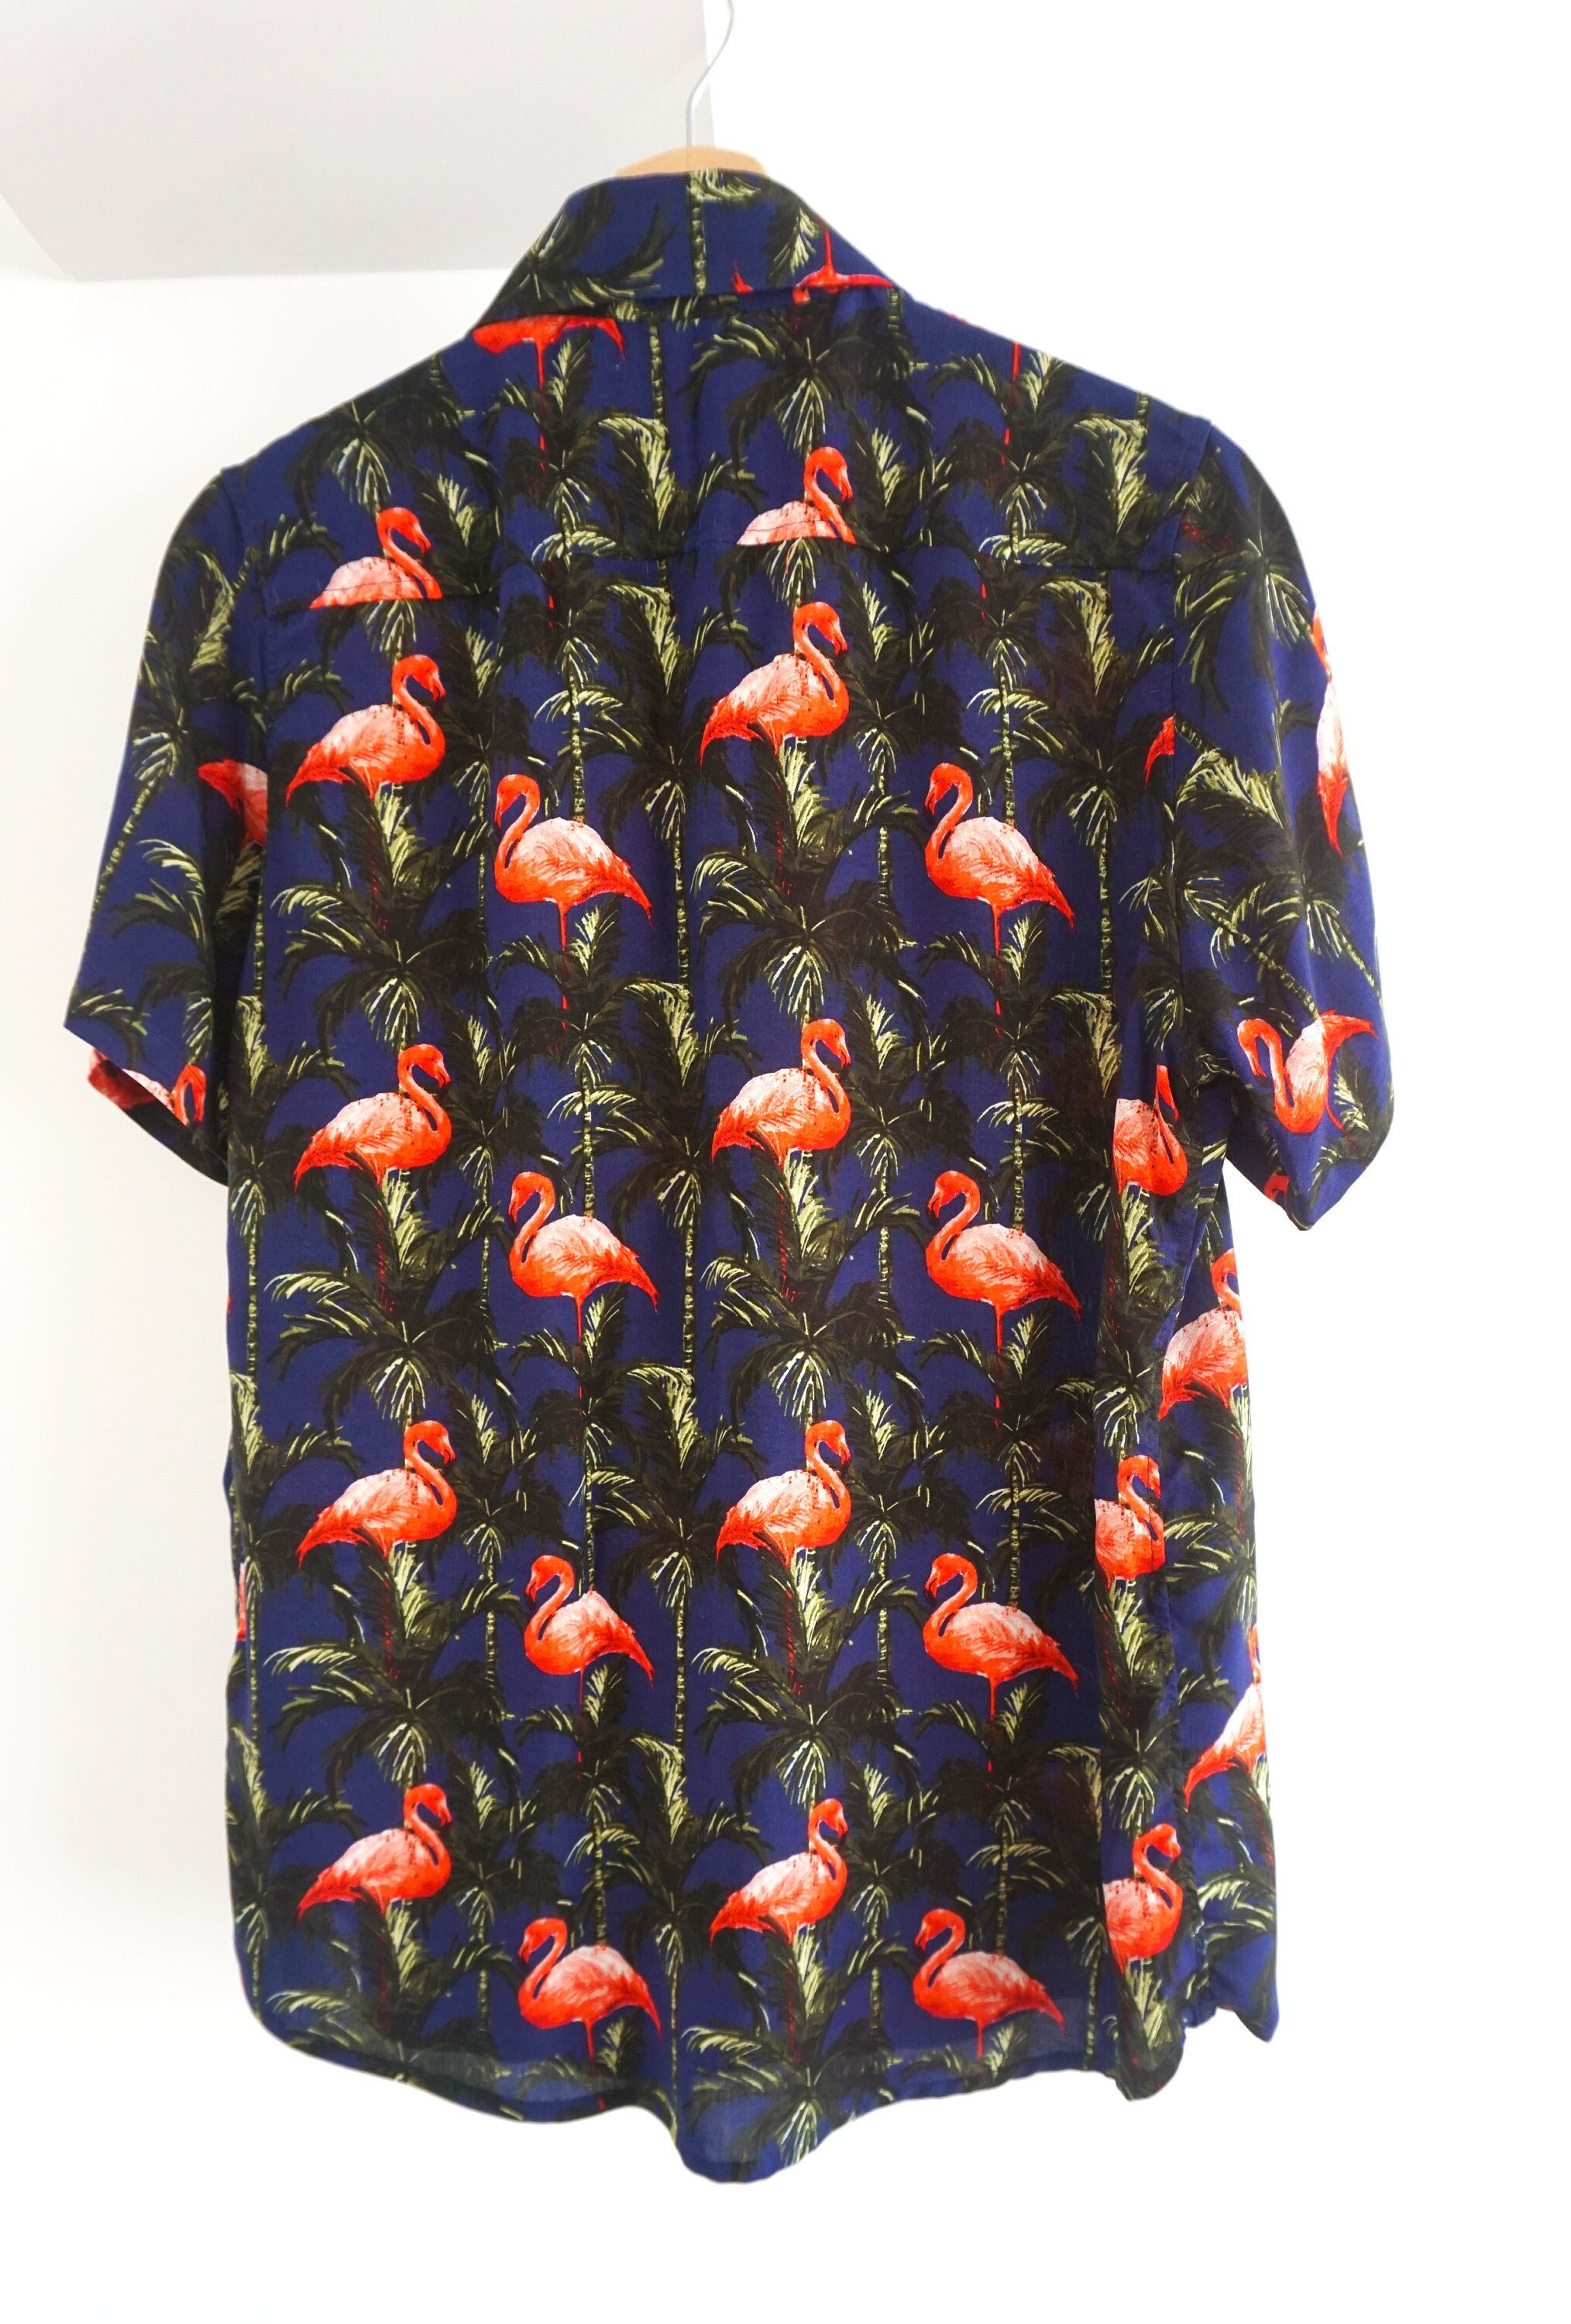 O'Carioca Flamingos Short Sleeve Button Up Shirt with a | Etsy